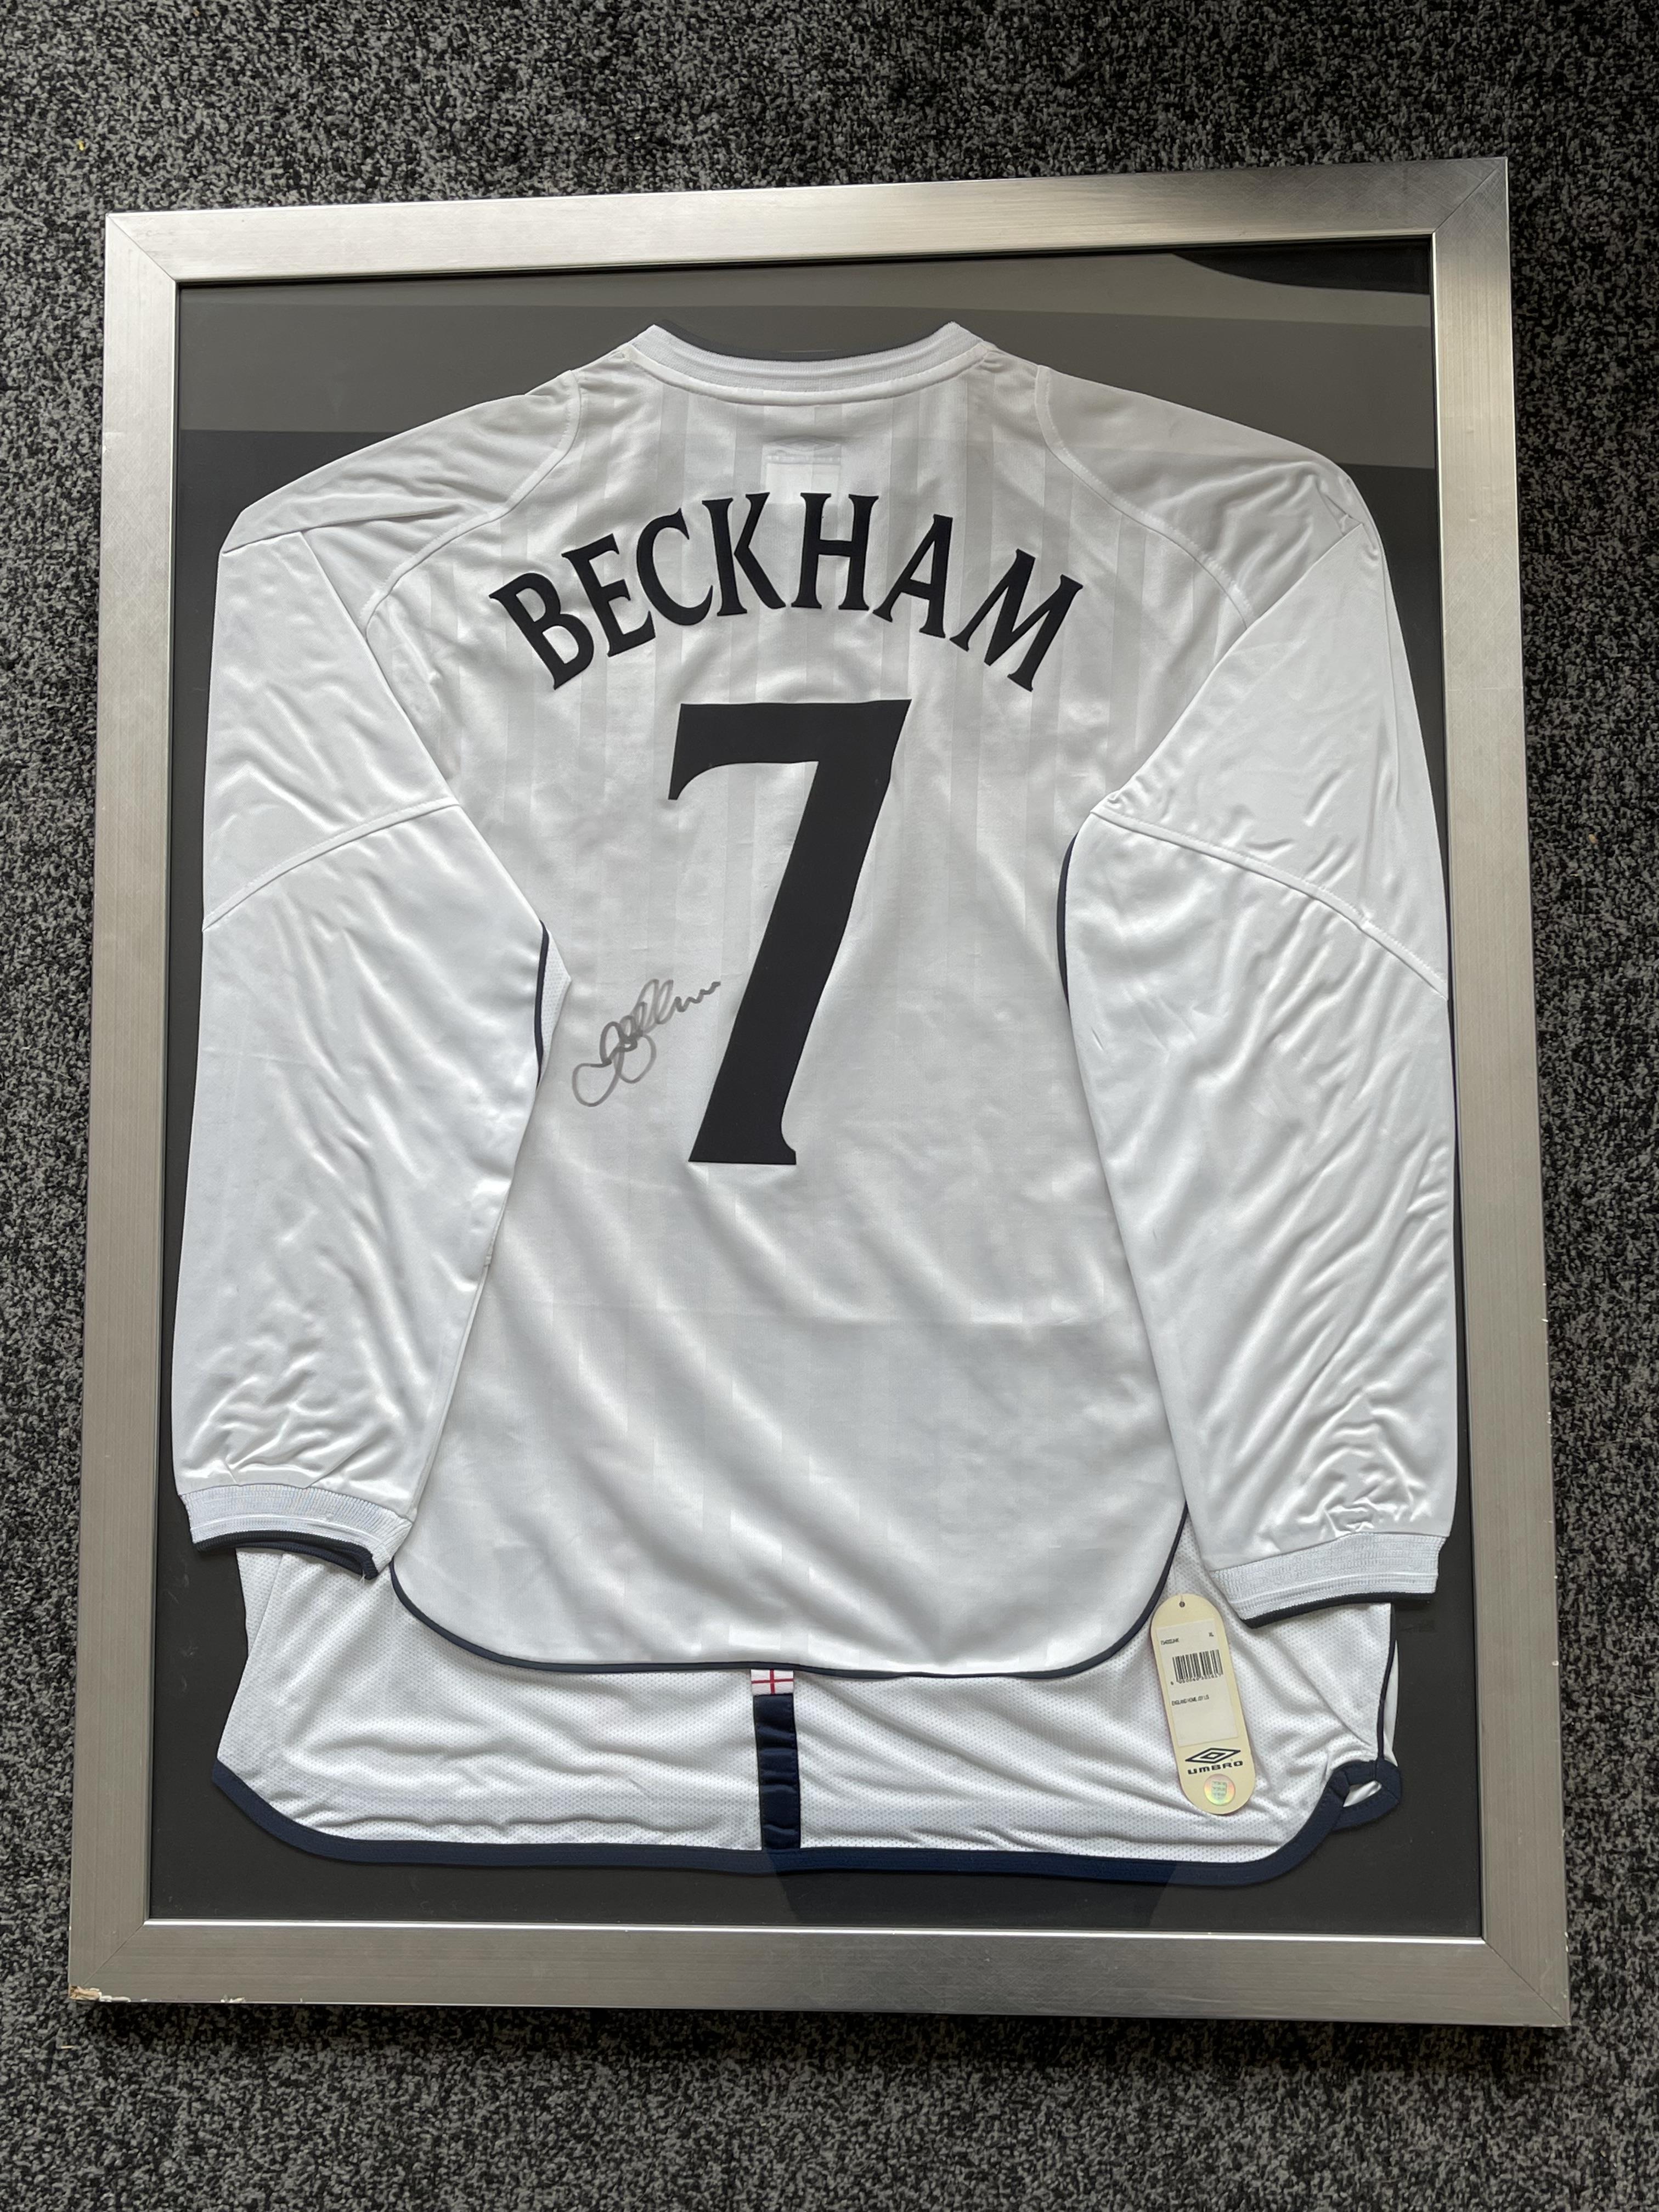 David Beckham - Framed Signed England Shirt with C